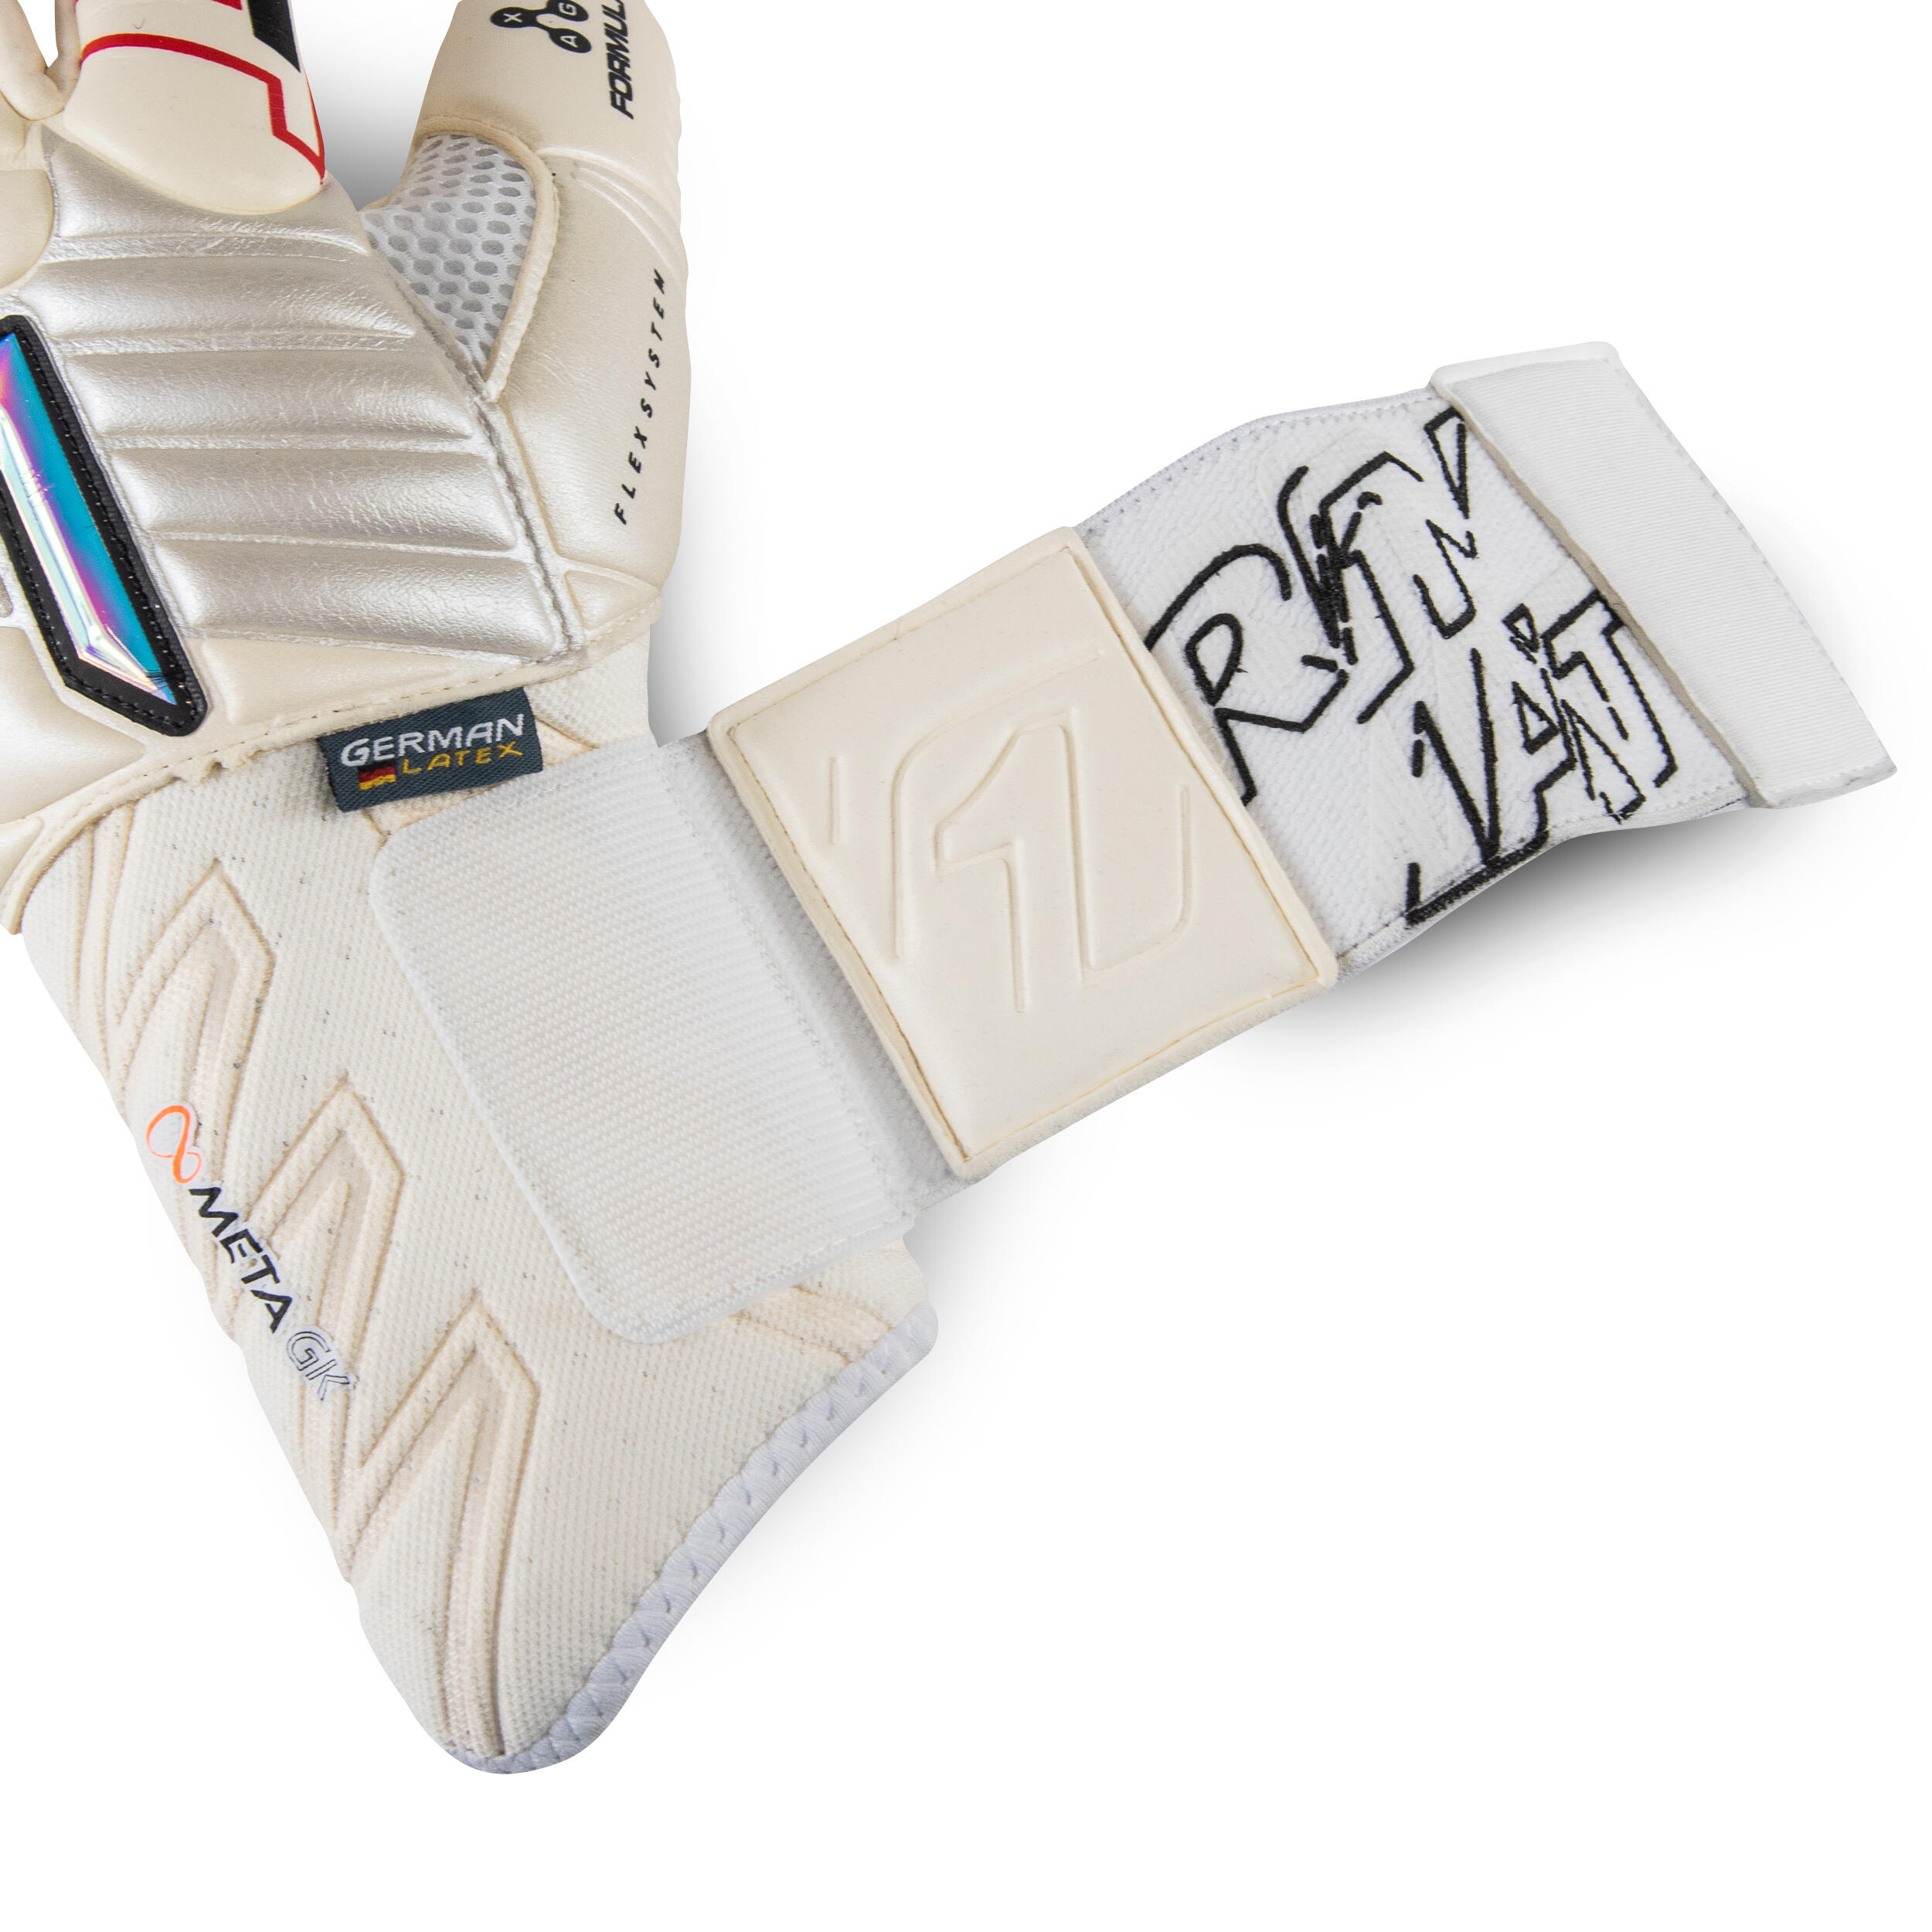 Rinat META GK PRO Goalkeeper Gloves 5/7